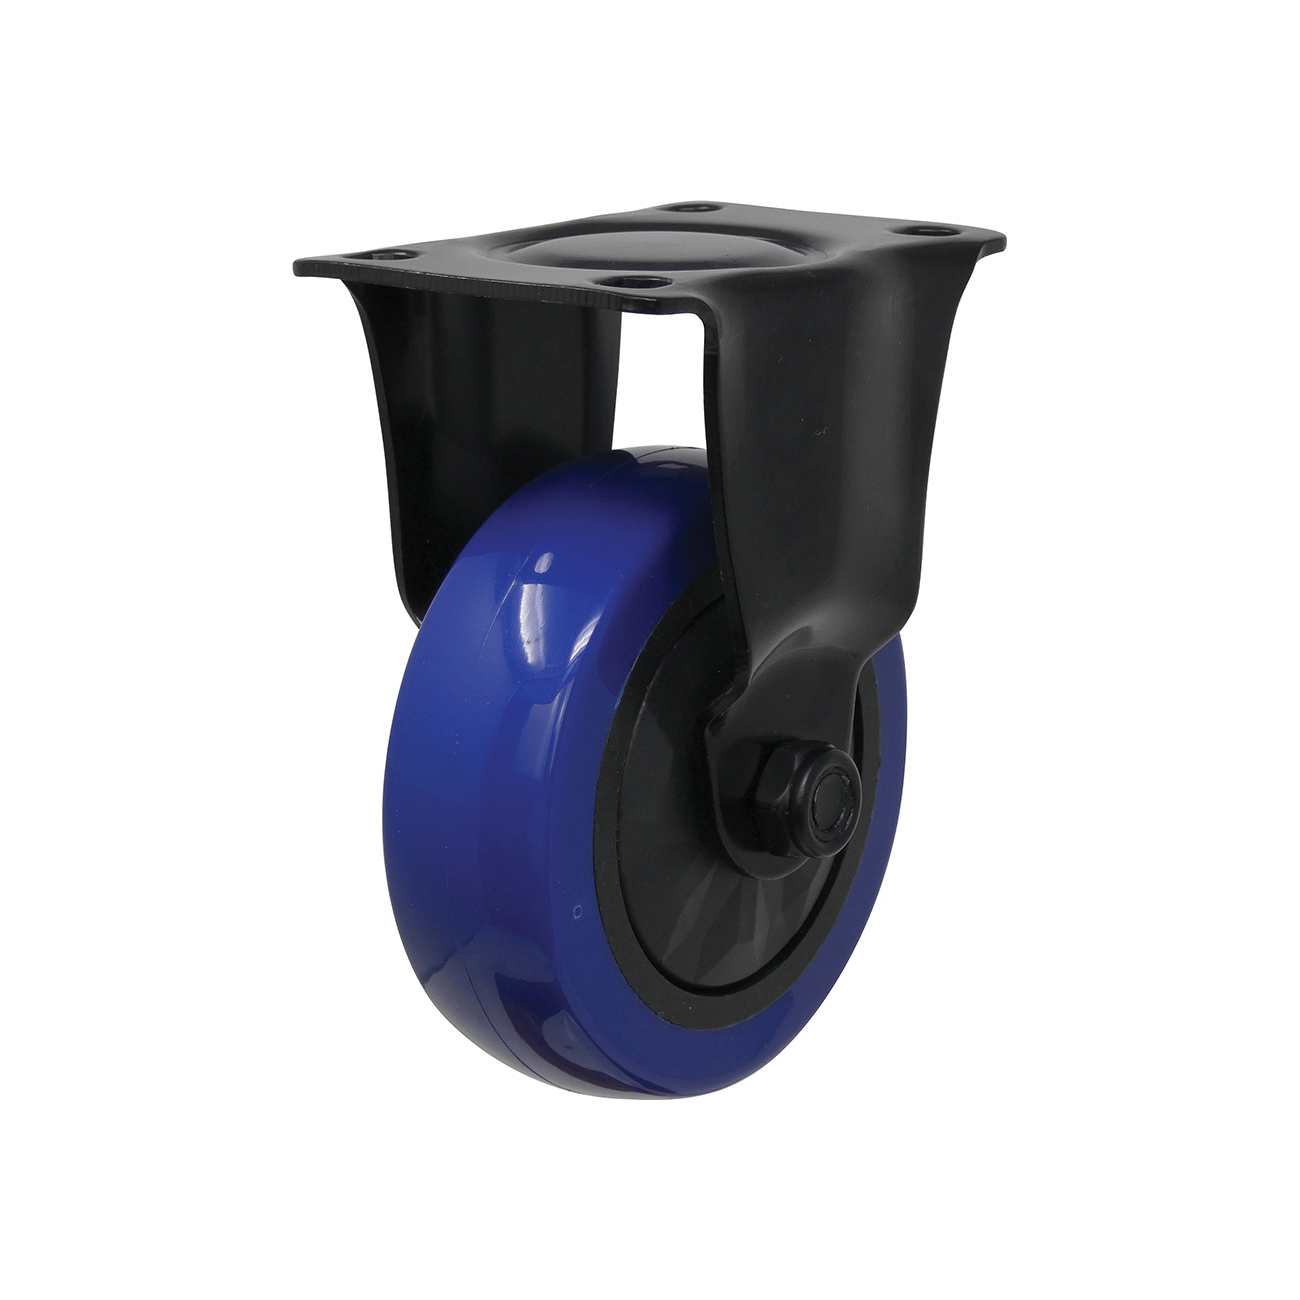 3662 Rigid Caster, 4 in Dia Wheel, TPU Wheel, Black/Blue, 300 lb, Polypropylene Housing Material